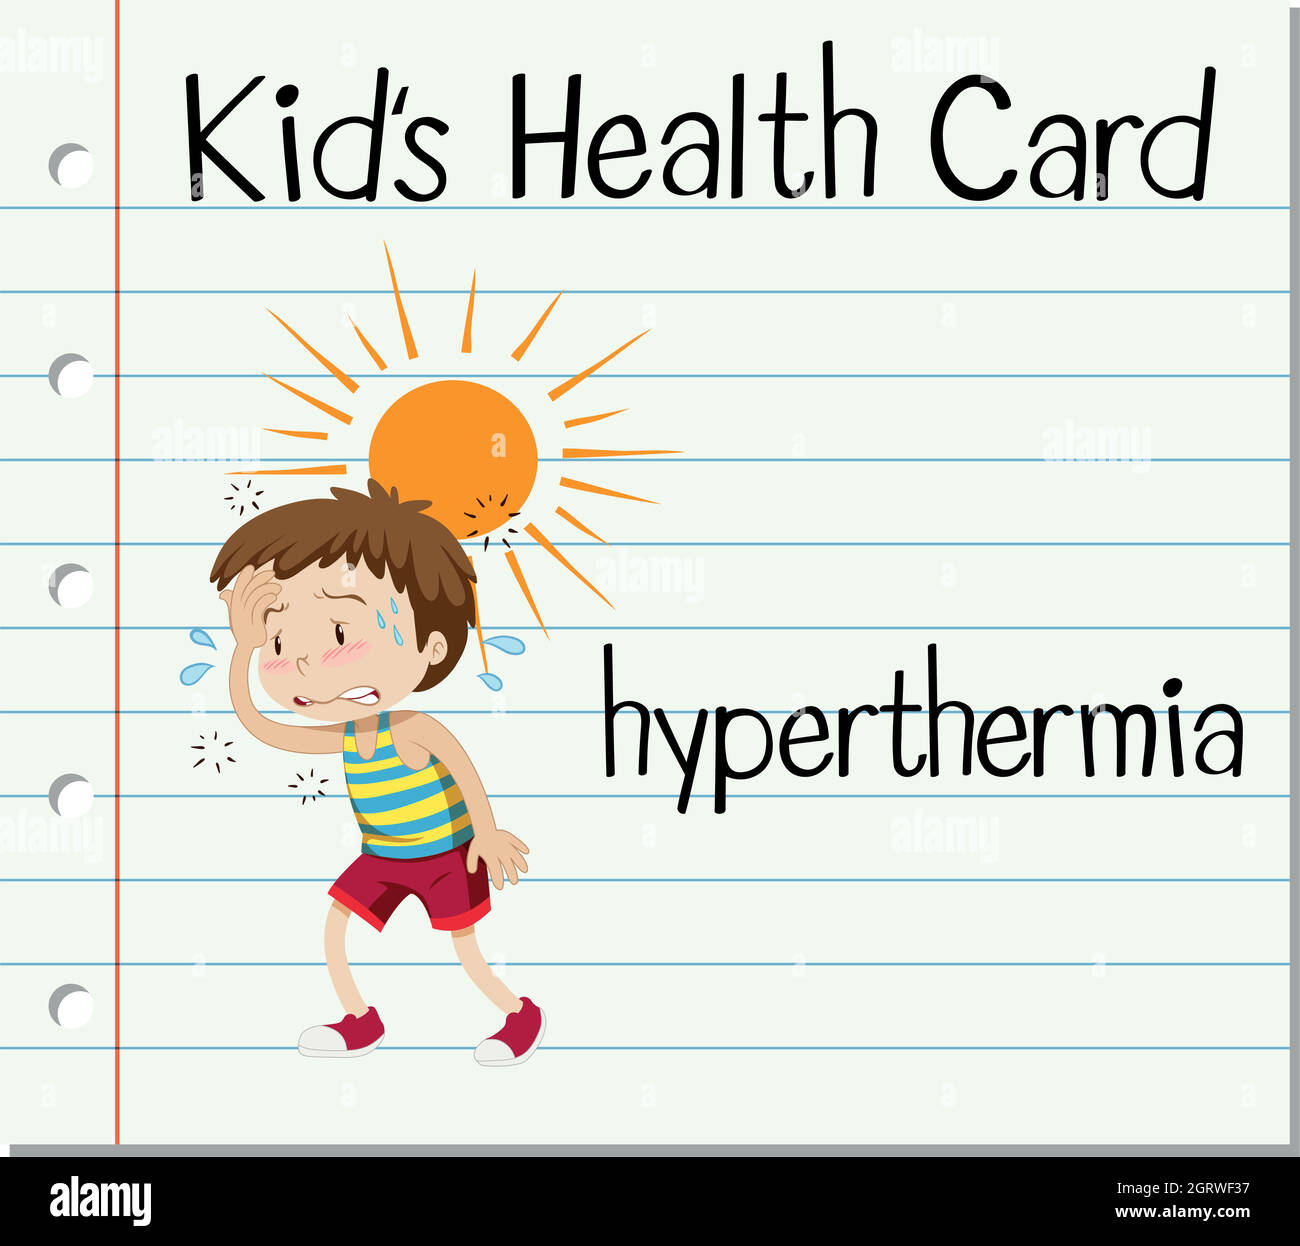 Health card with boy having hyperthermia Stock Vector